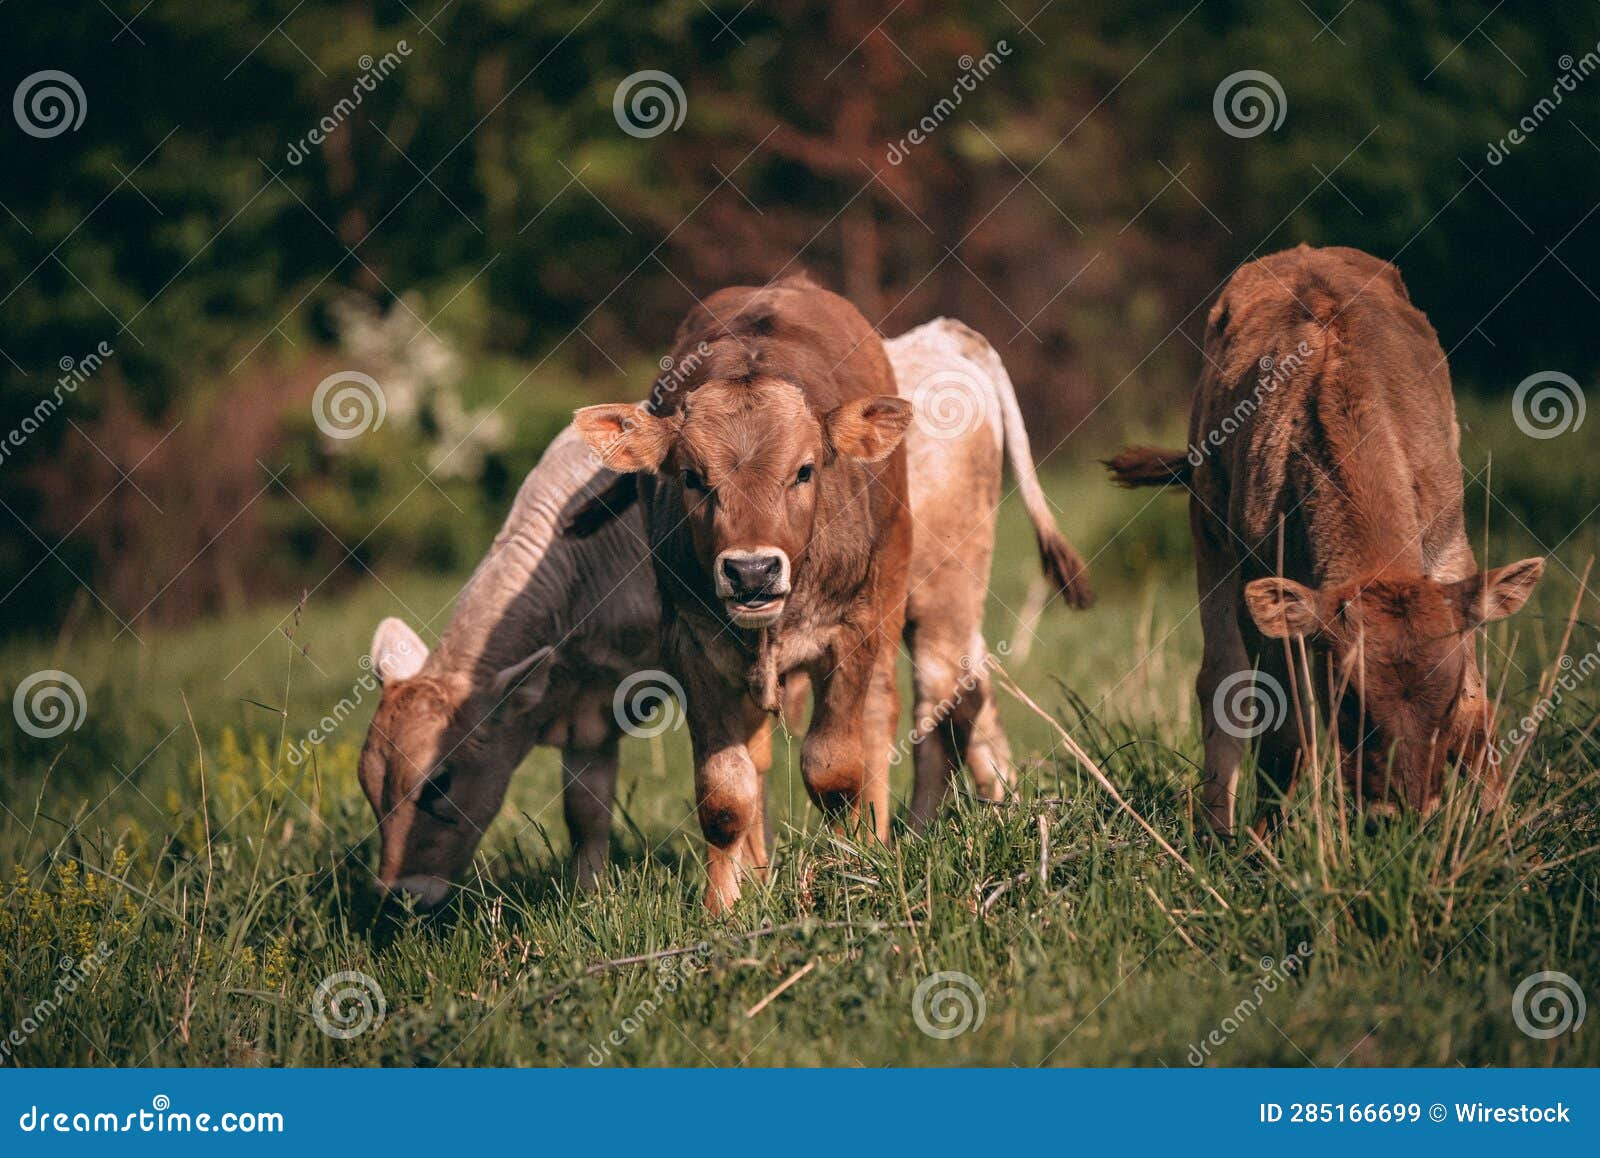 herd of cattles from the bovidae family grazing in a lush and green springtime garden